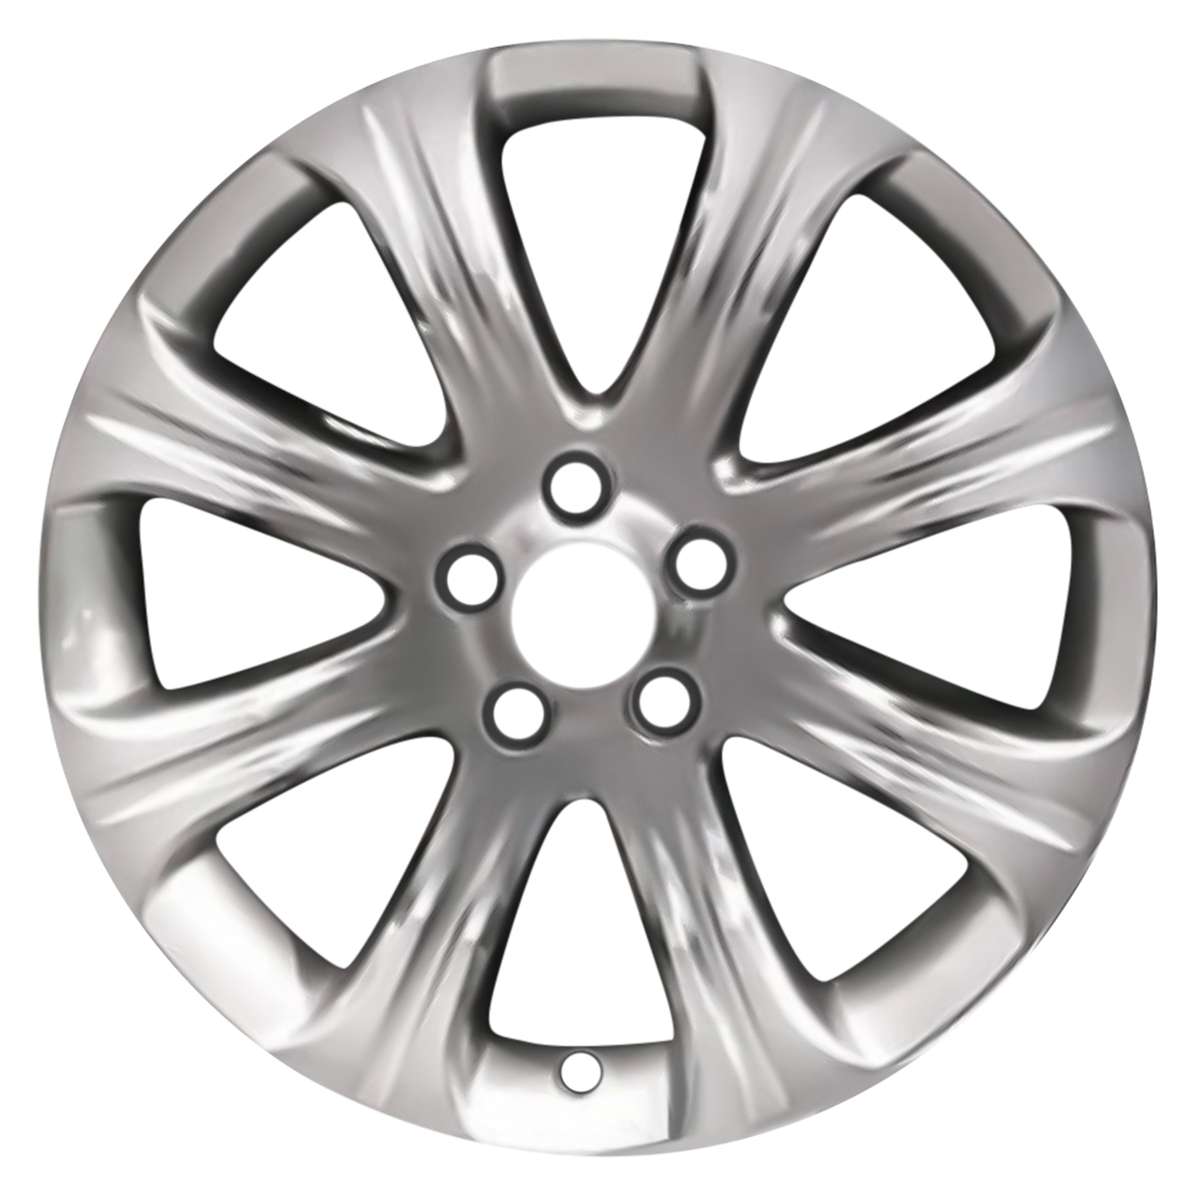 2018 Chrysler 300 19" OEM Wheel Rim W98674H